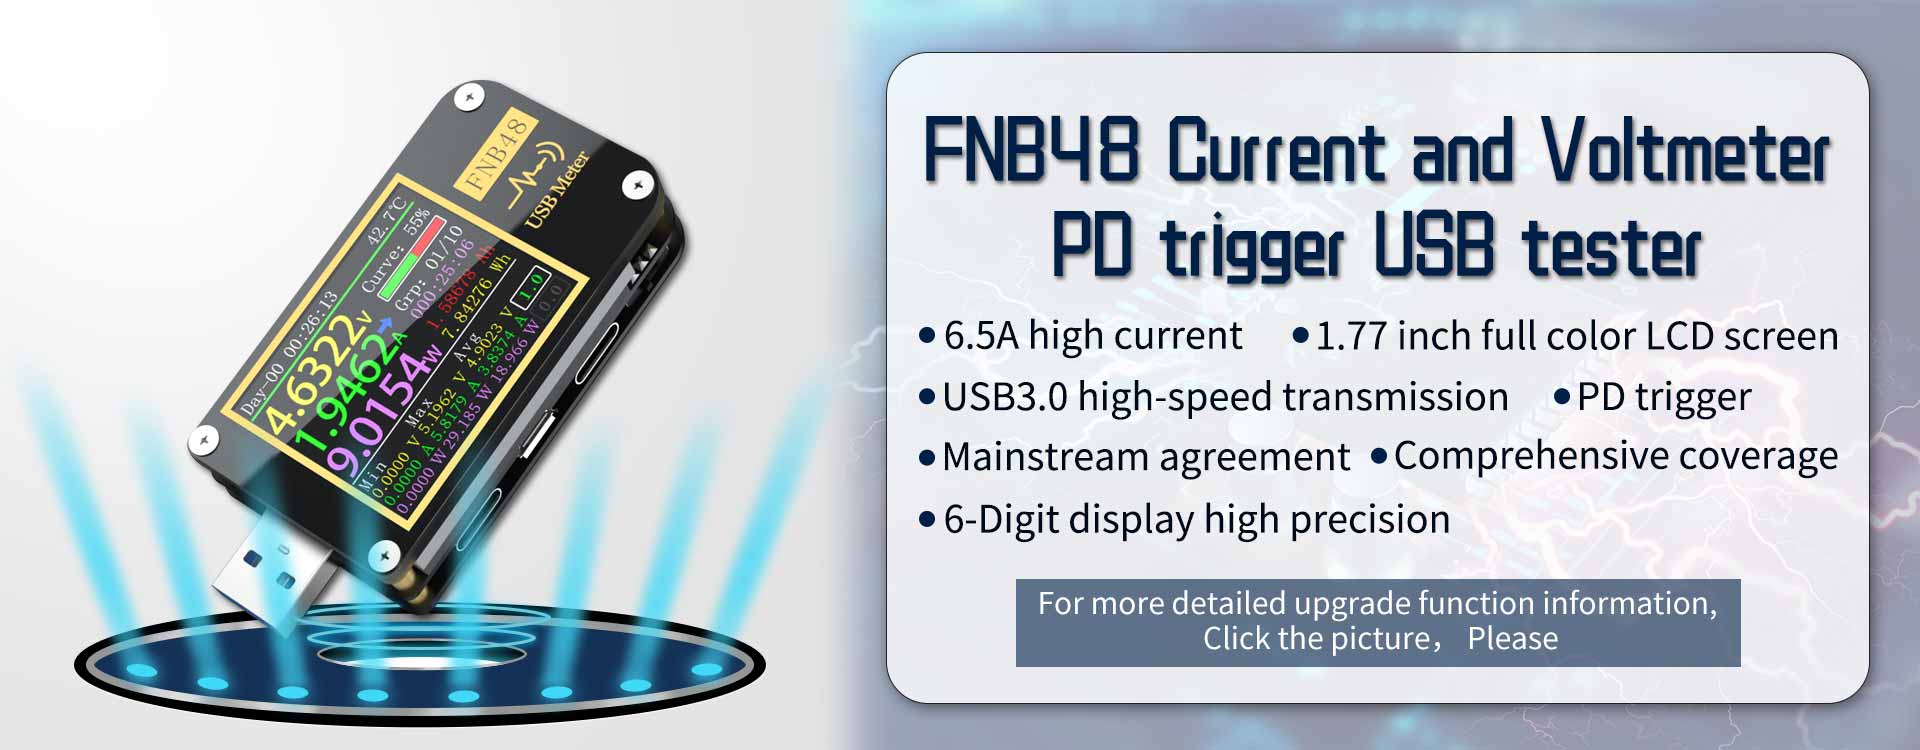 FNIRSI-1C15 Professional Digital Oscilloscope